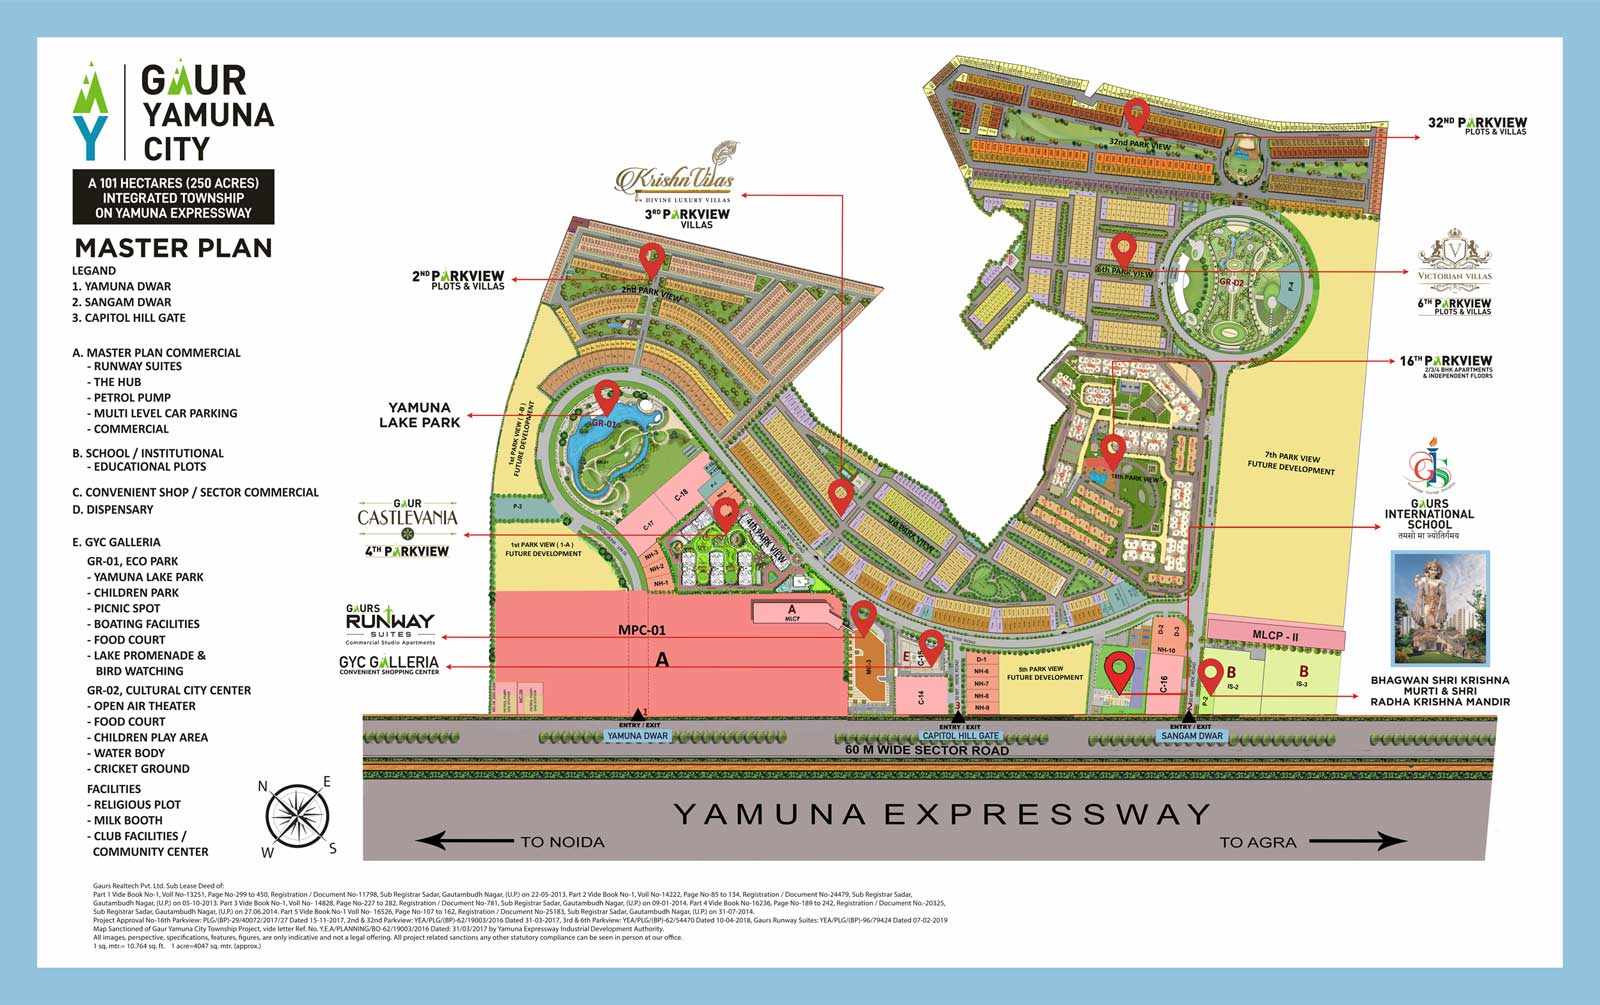 Gaur Yamuna City 32nd Park View Master Plan